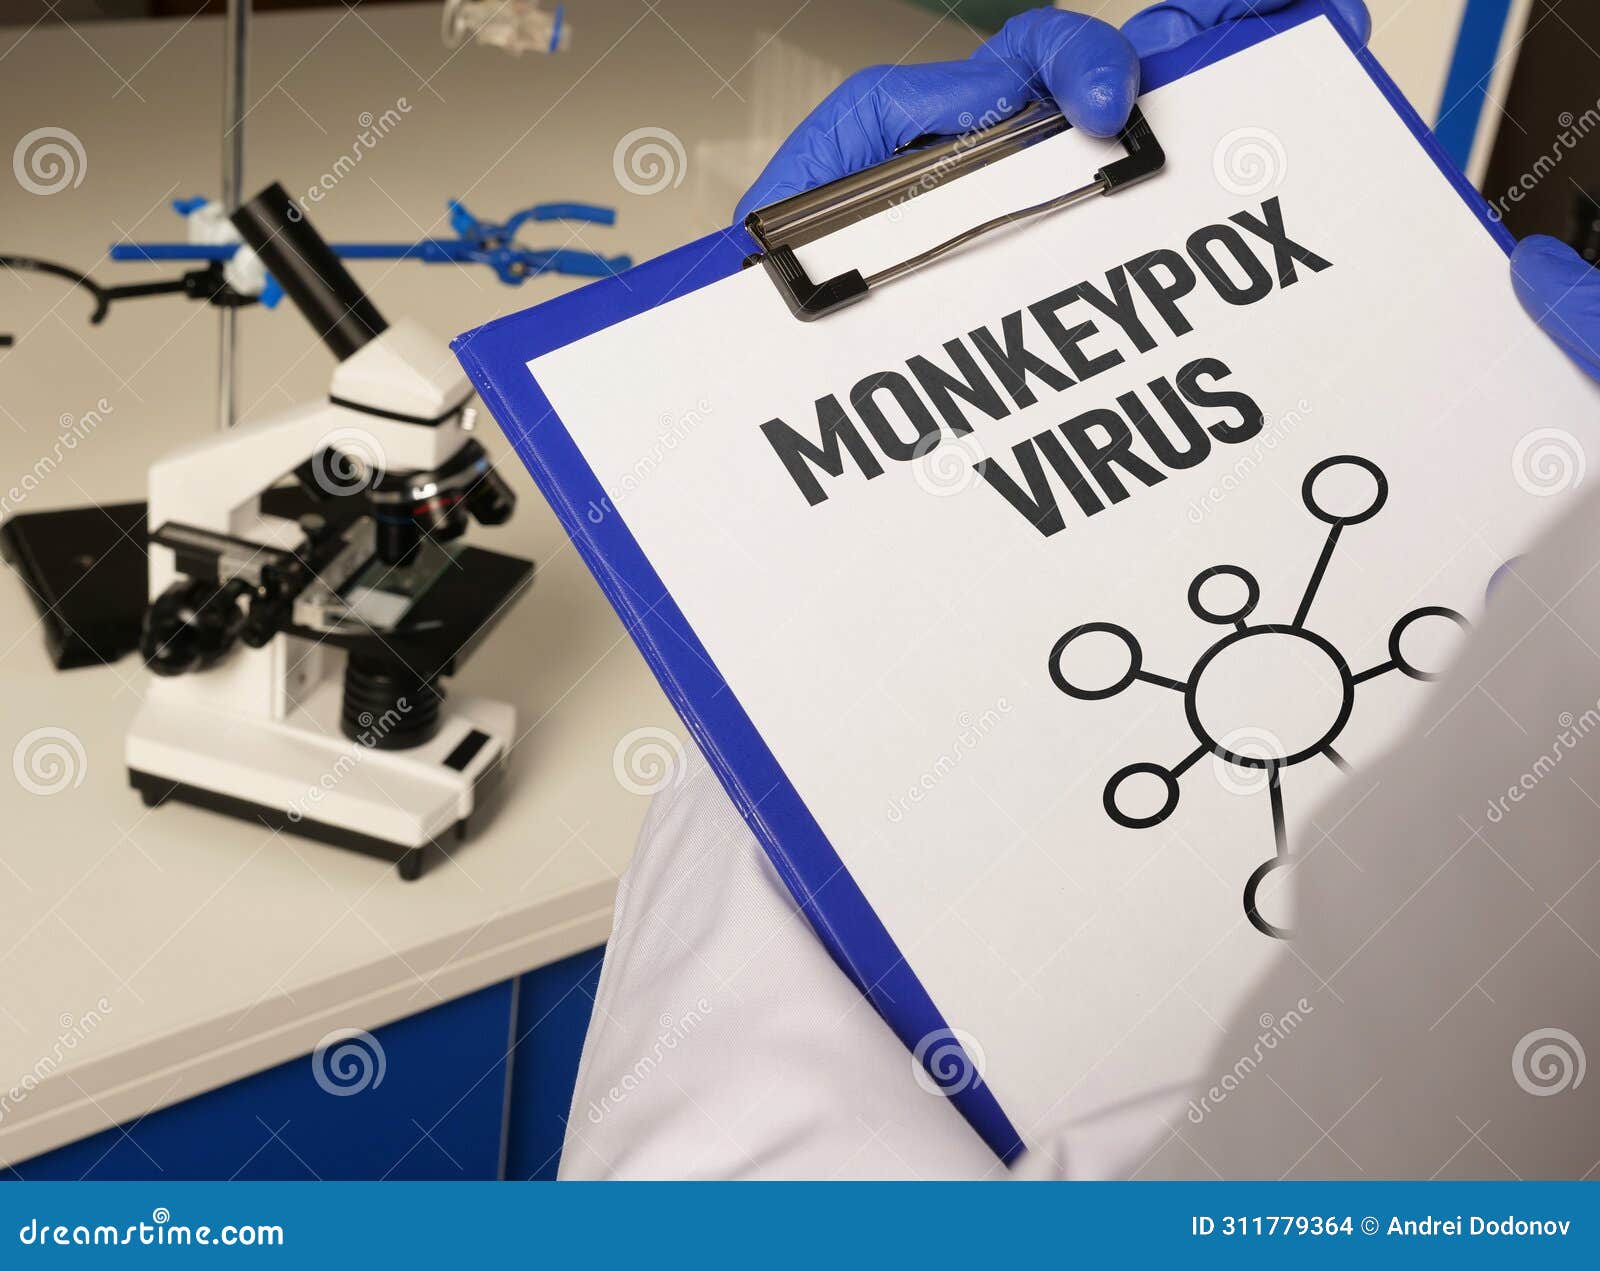 monkeypox virus infection pandemic. orthopoxvirus in the family poxviridae